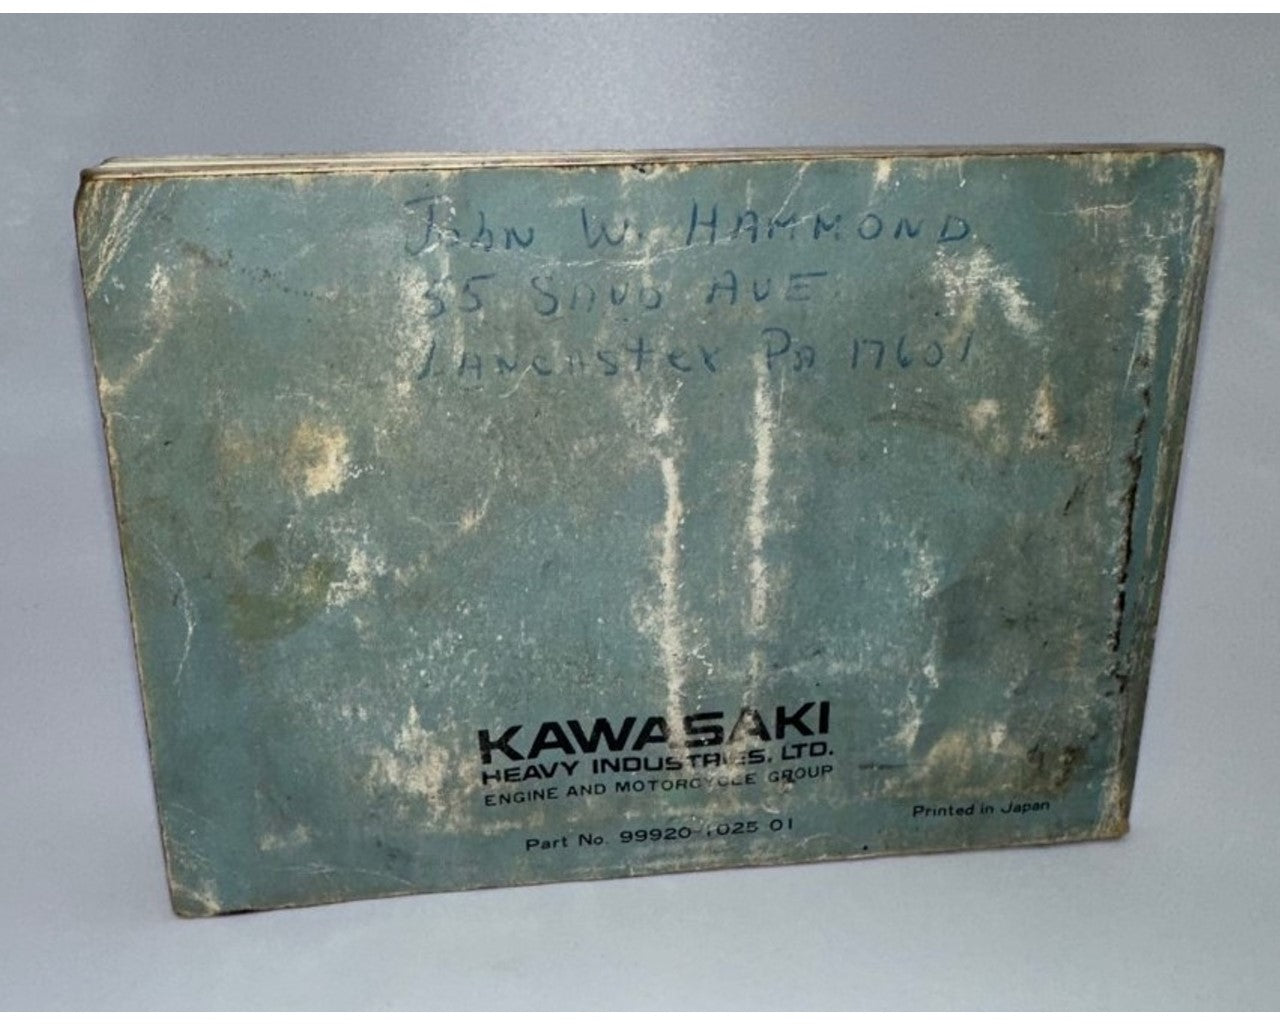 Kawasaki Factory Owners Manual 1978 KZ650-C2 99920-1025-01 Used